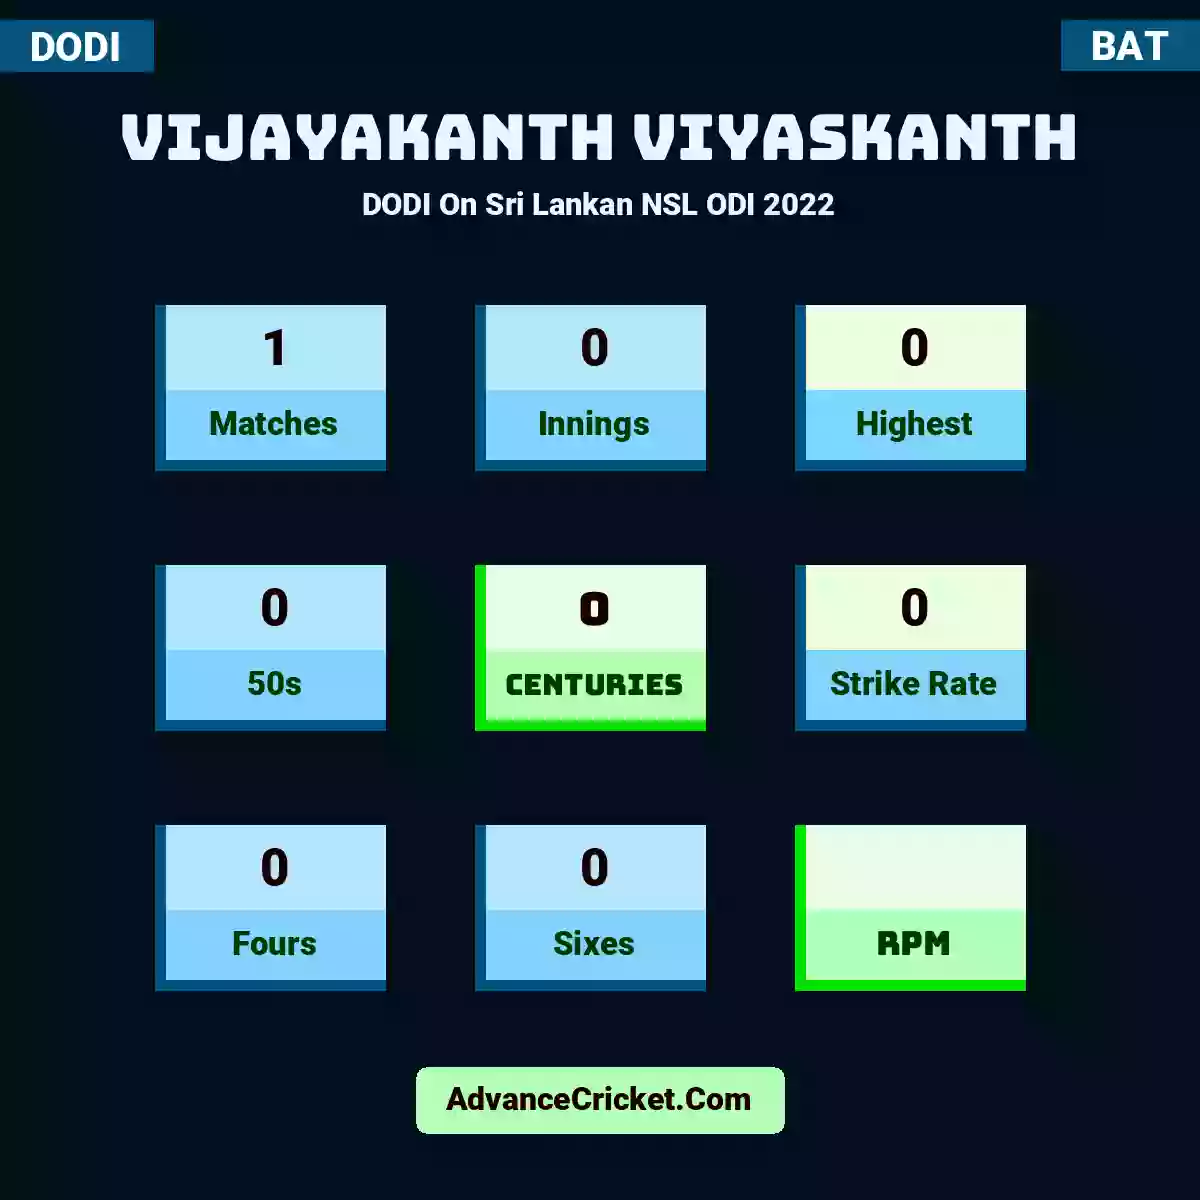 Vijayakanth Viyaskanth DODI  On Sri Lankan NSL ODI 2022, Vijayakanth Viyaskanth played 1 matches, scored 0 runs as highest, 0 half-centuries, and 0 centuries, with a strike rate of 0. V.Viyaskanth hit 0 fours and 0 sixes.